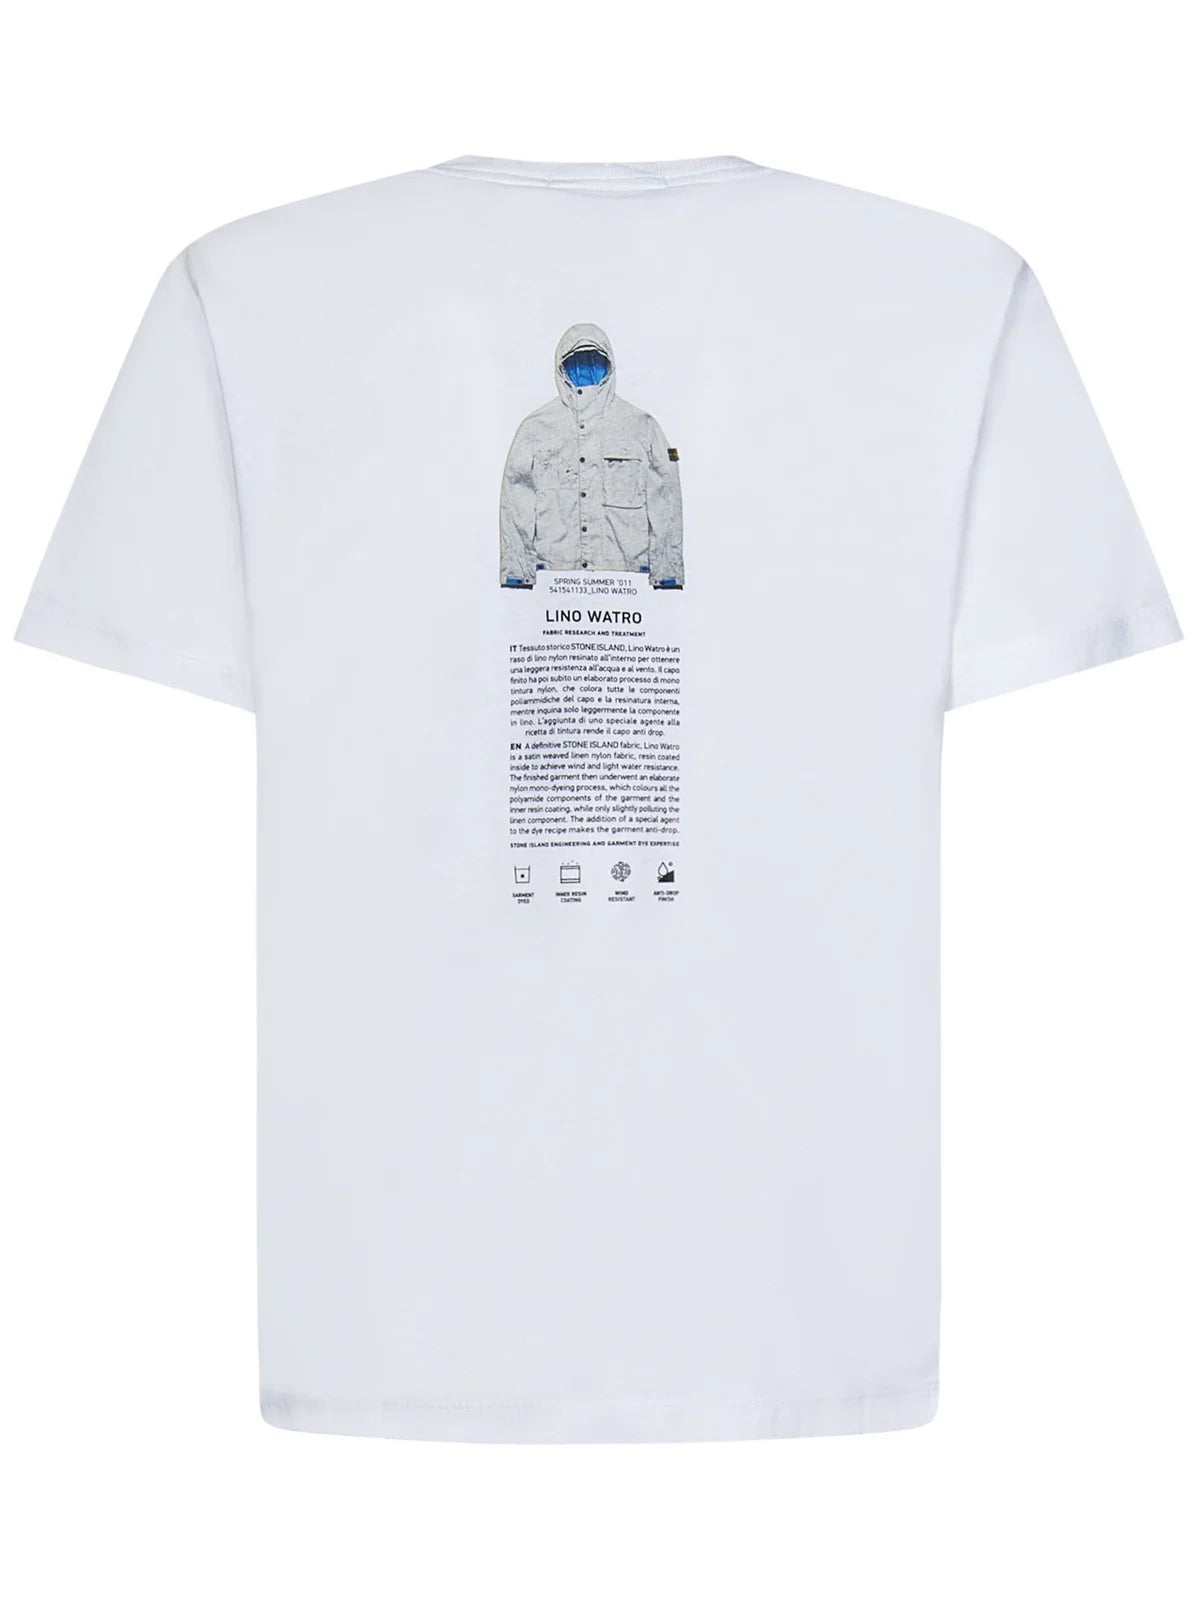 Stone Island Archivio Project T Shirt White